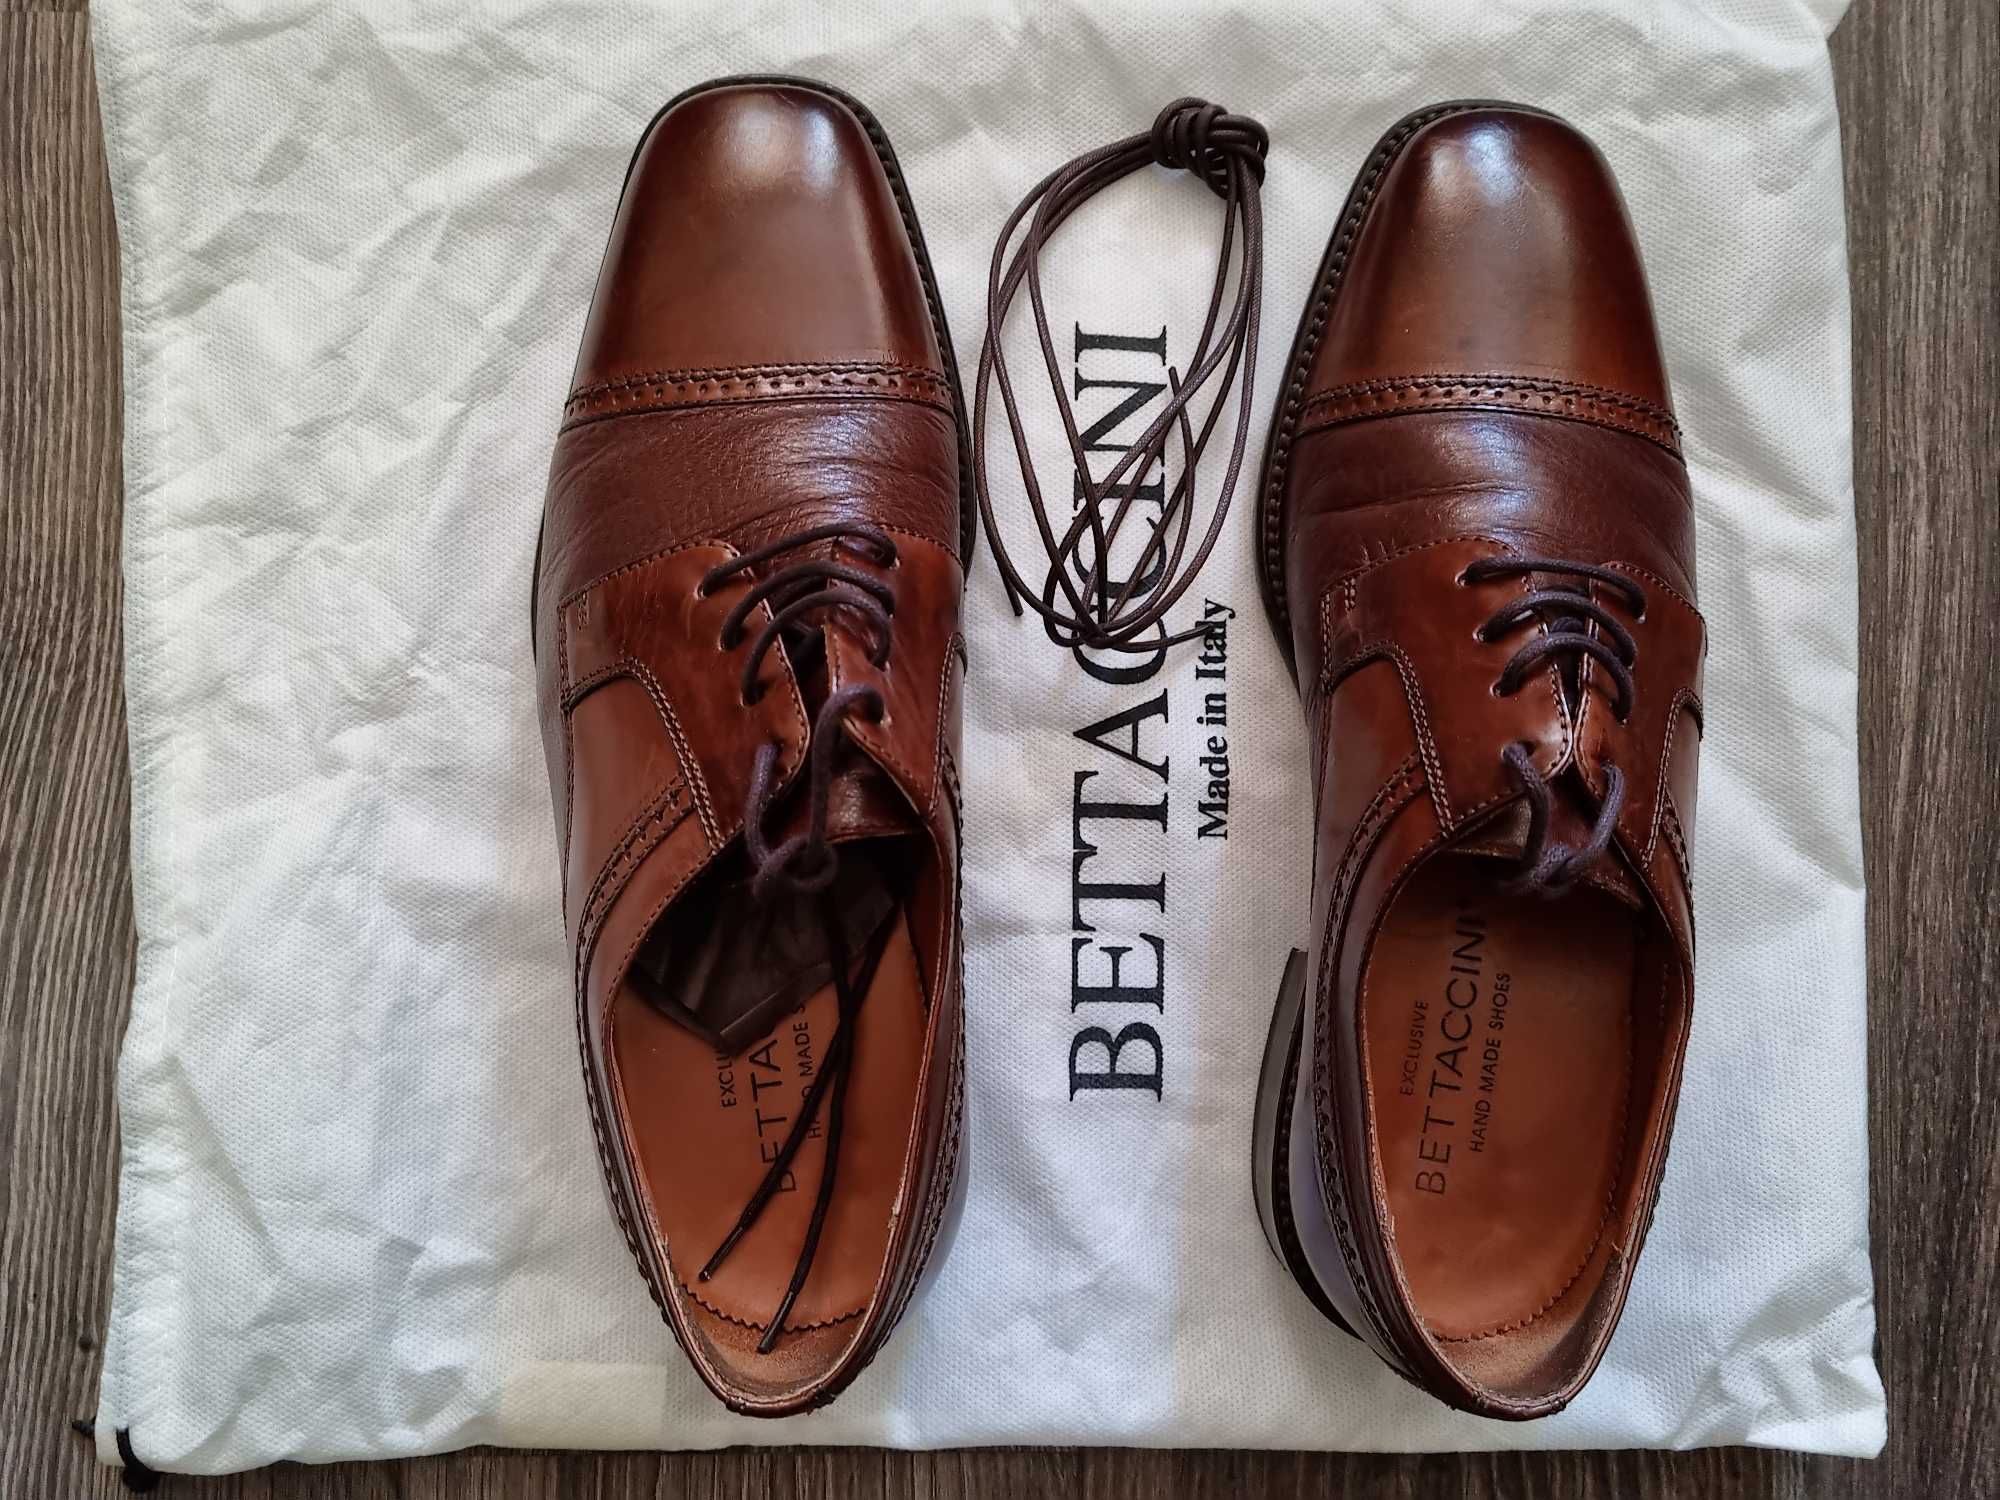 Продавам италиански обувки Бетачини- ръчна изработка.